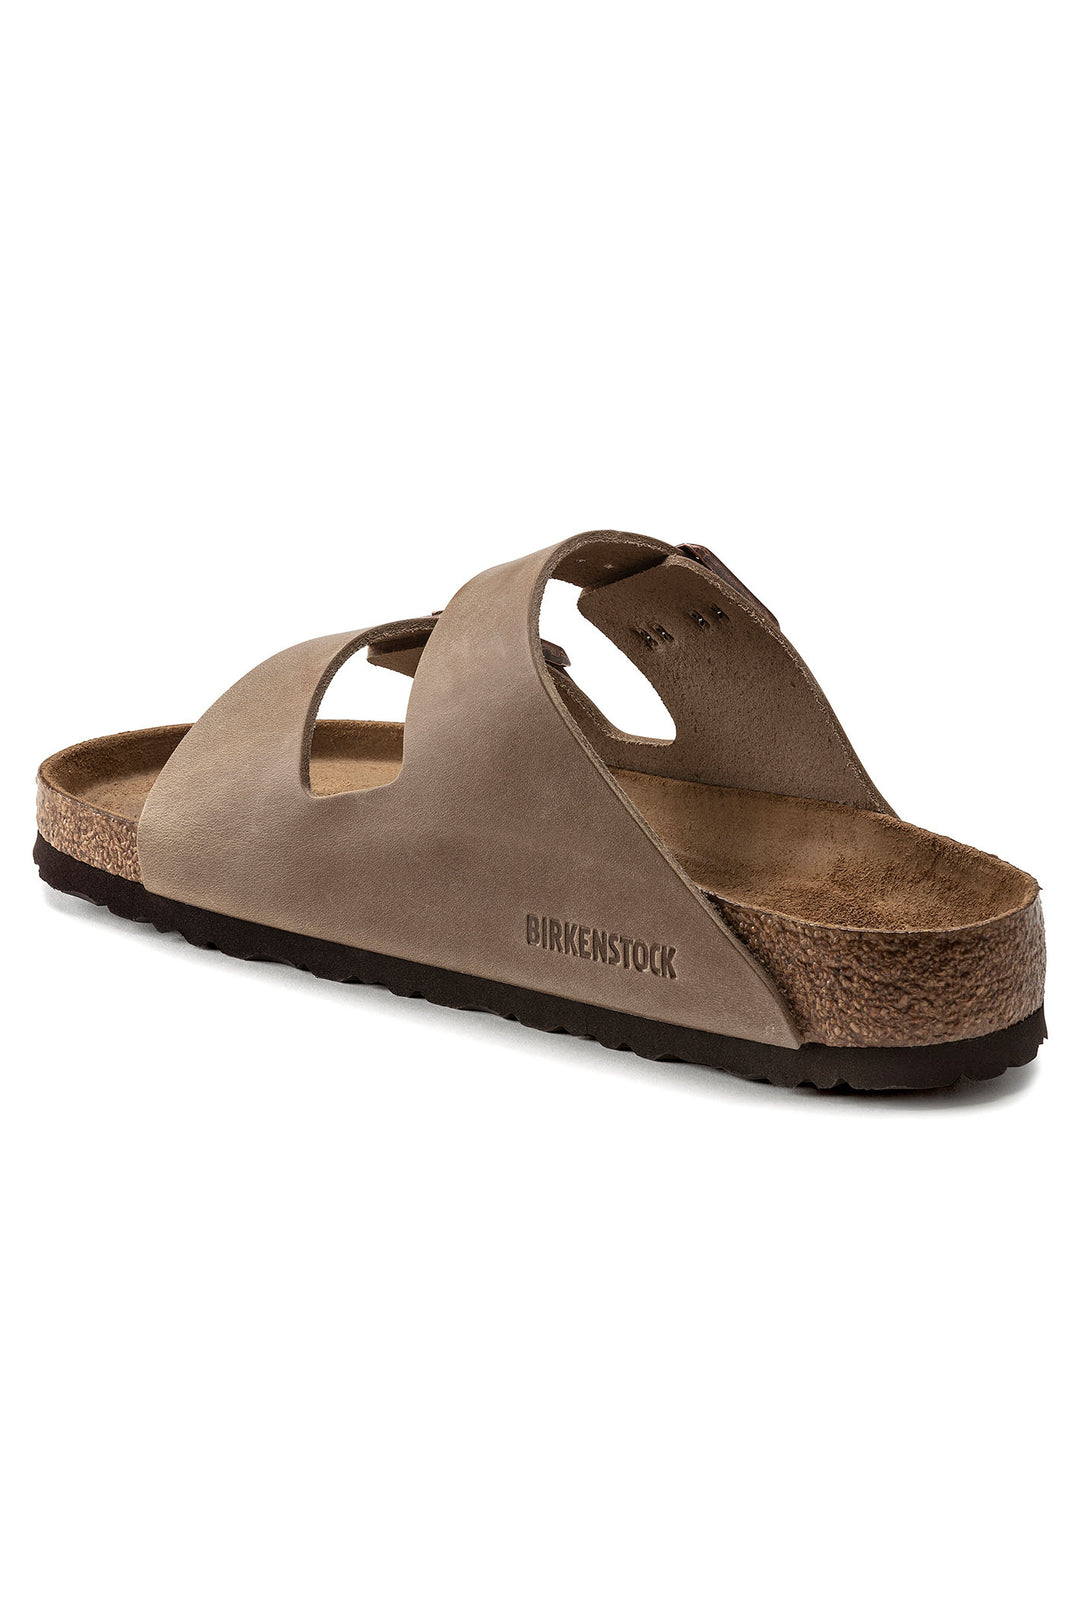 Birkenstock Arizona 0552813 Tobacco Brown Oiled Leather SFB Narrow Fit Sandal - Shirley Allum Boutique